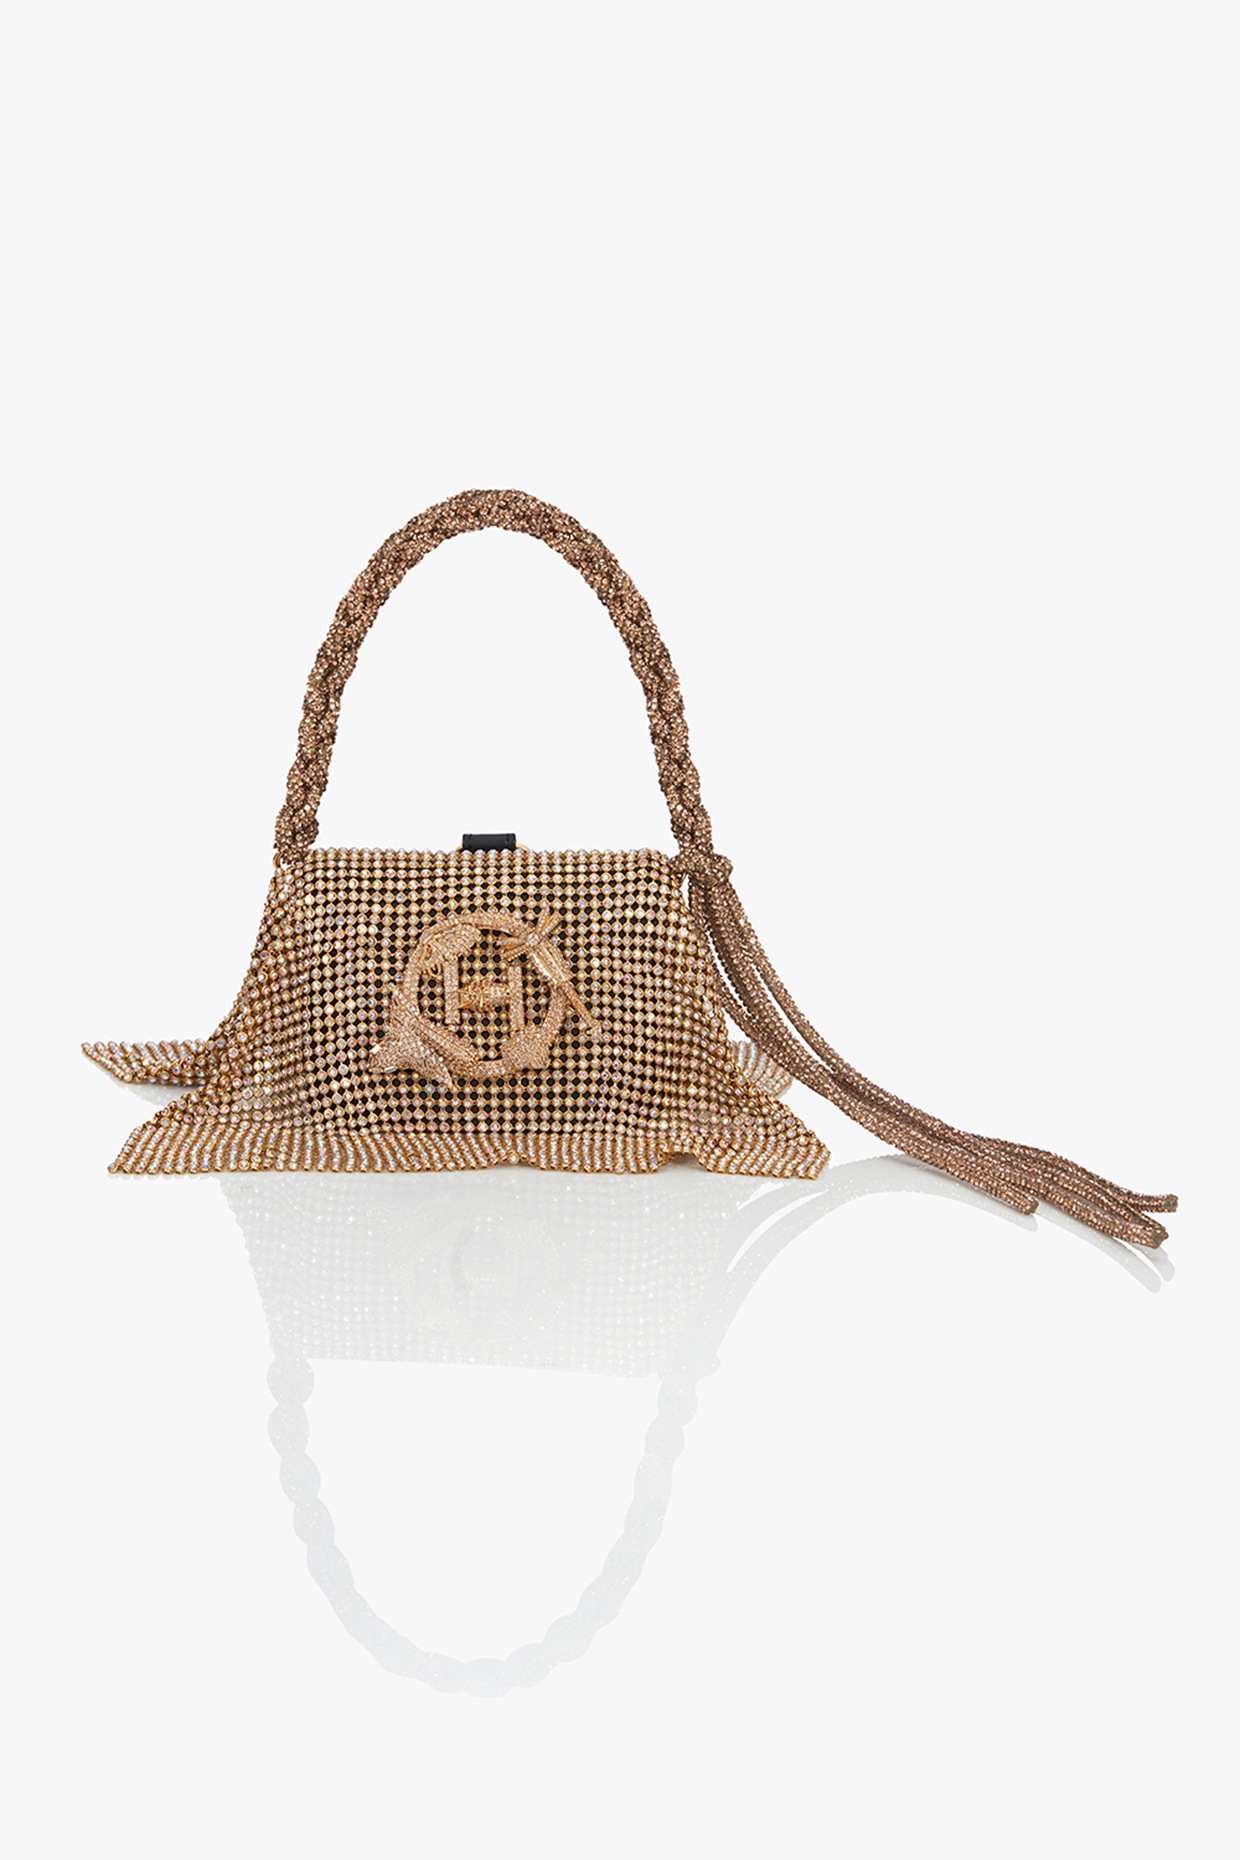 Zara gold sling bag | Zara bags, Brown leather bag, Sling bag